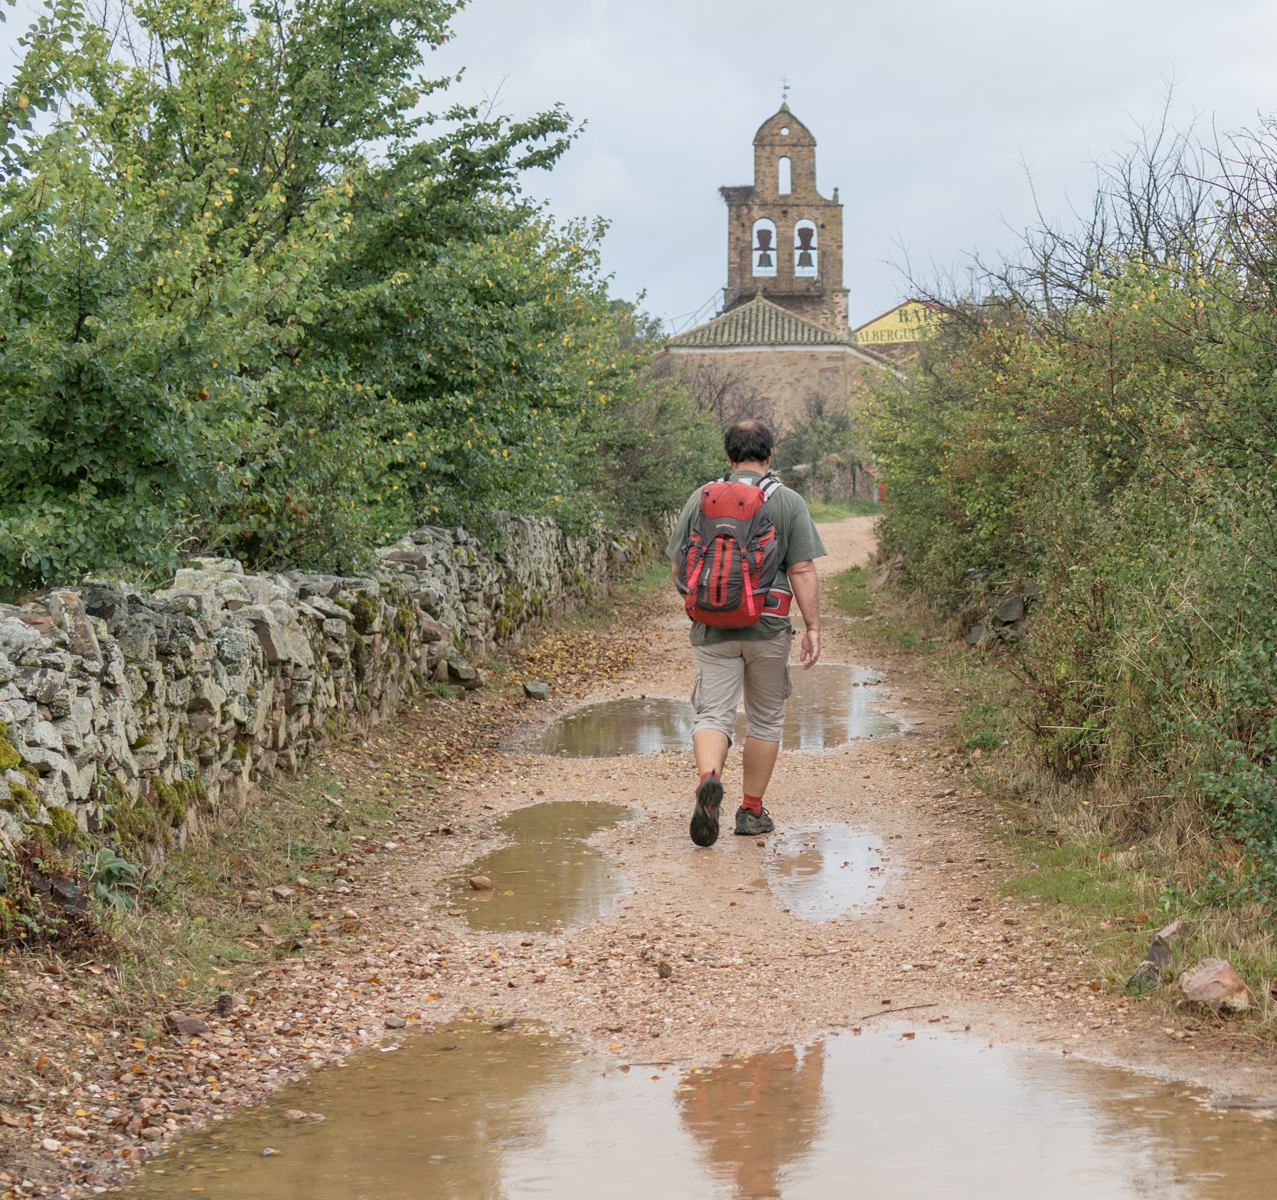 A pilgrim on the Camino Francés approaches the town of Santa Catalina de Somoza, Spain | Photo by Mike Hudak